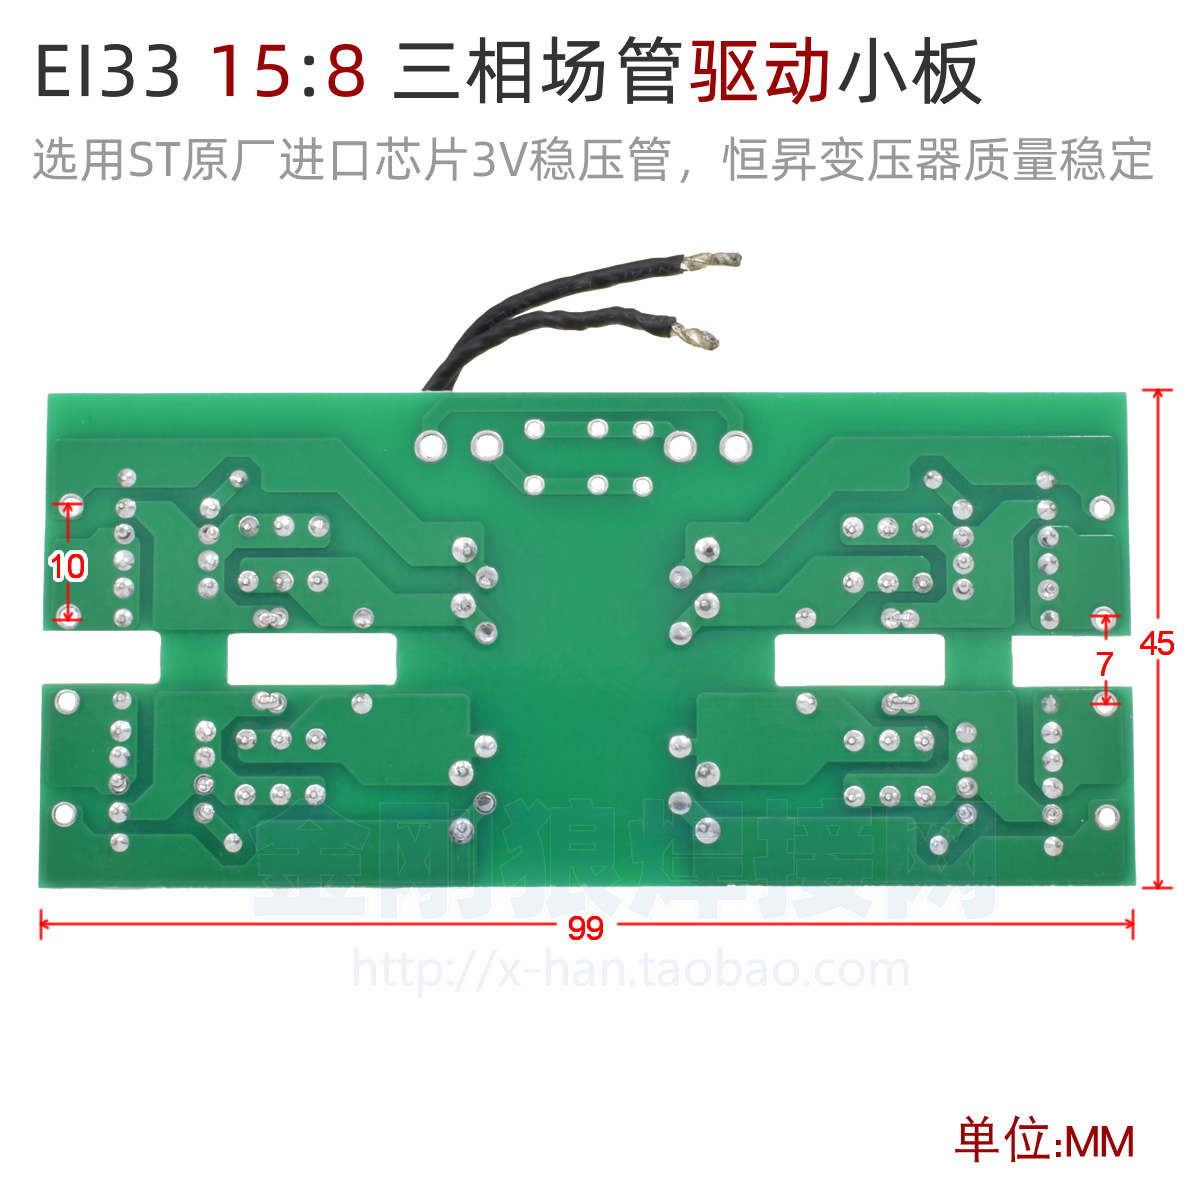 EI-33 15:8场管驱动板深瑞款双芯机 WSE CUT常用驱动能力强-图0